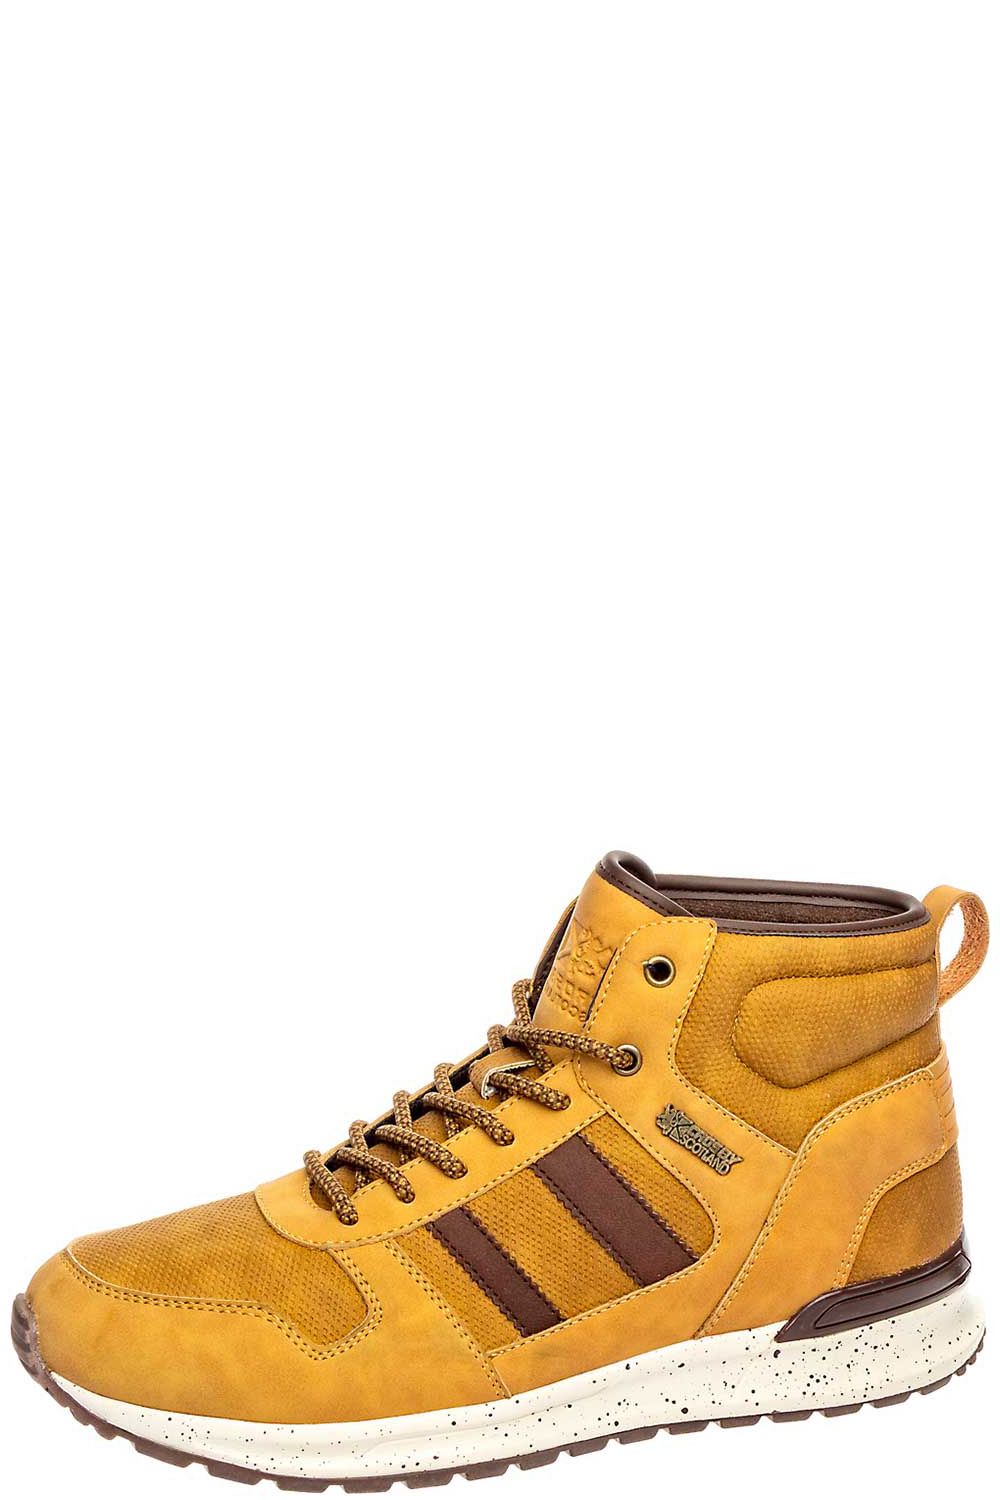 Ботинки Crosby, размер 41, цвет оранжевый - фото 1